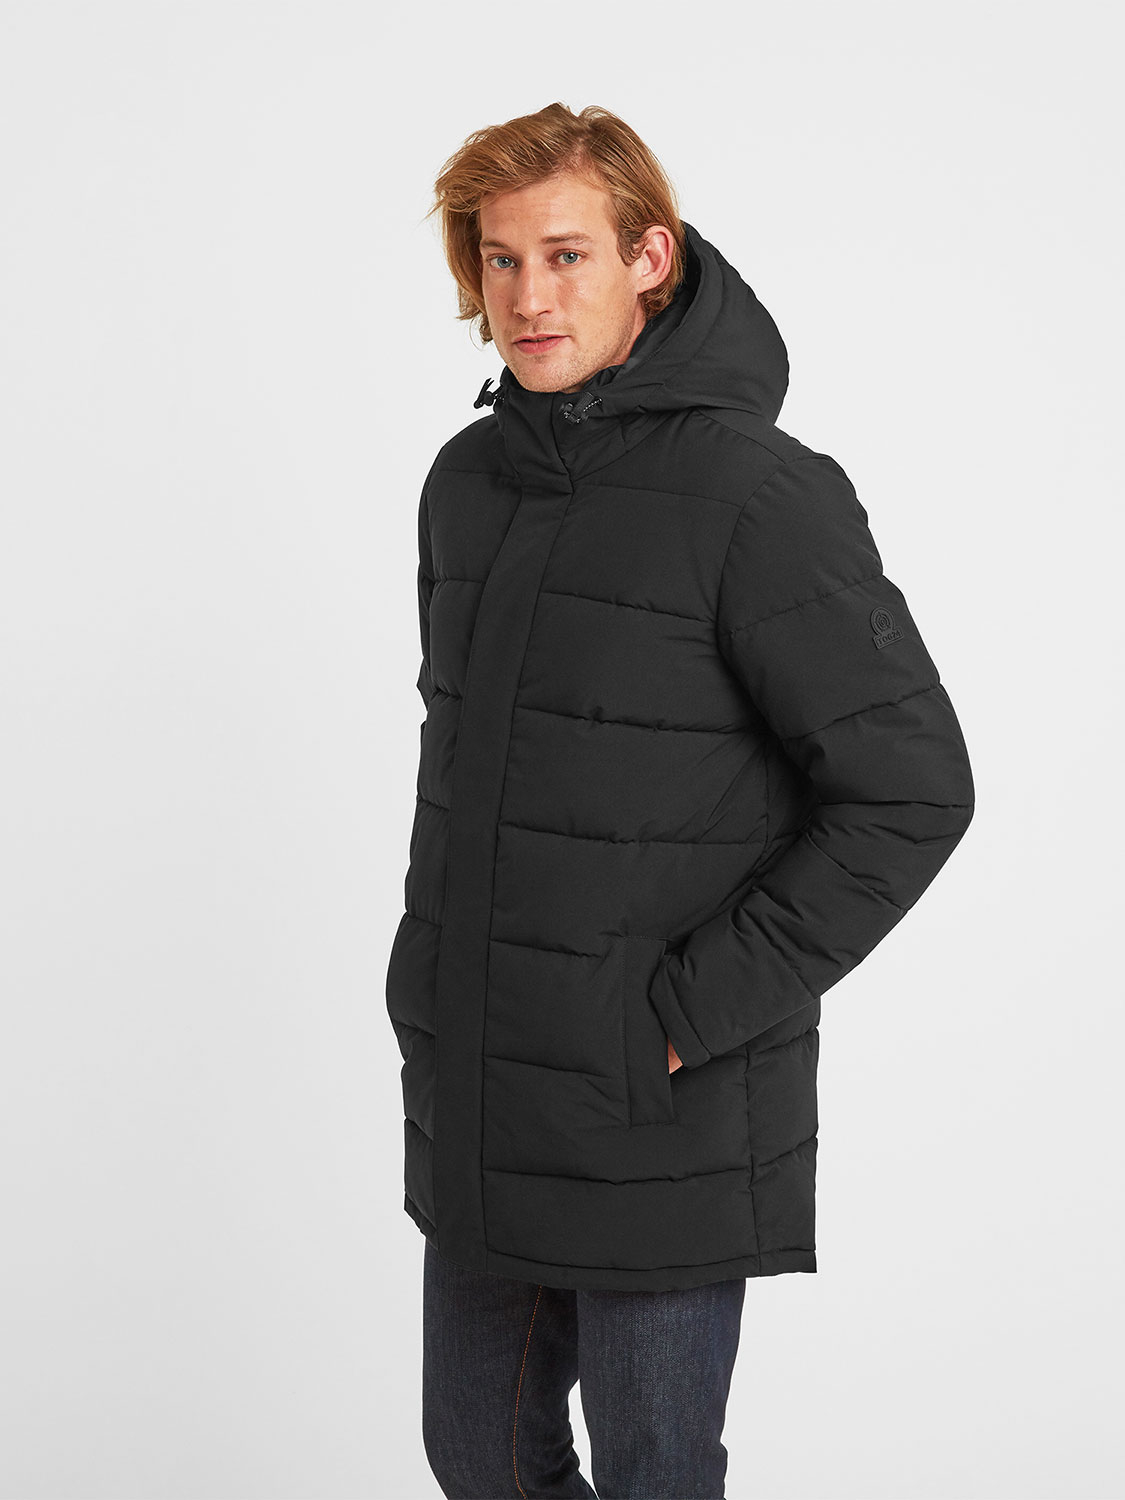 Watson Long Insulated Jacket - Size: 6XL Men’s Black Tog24